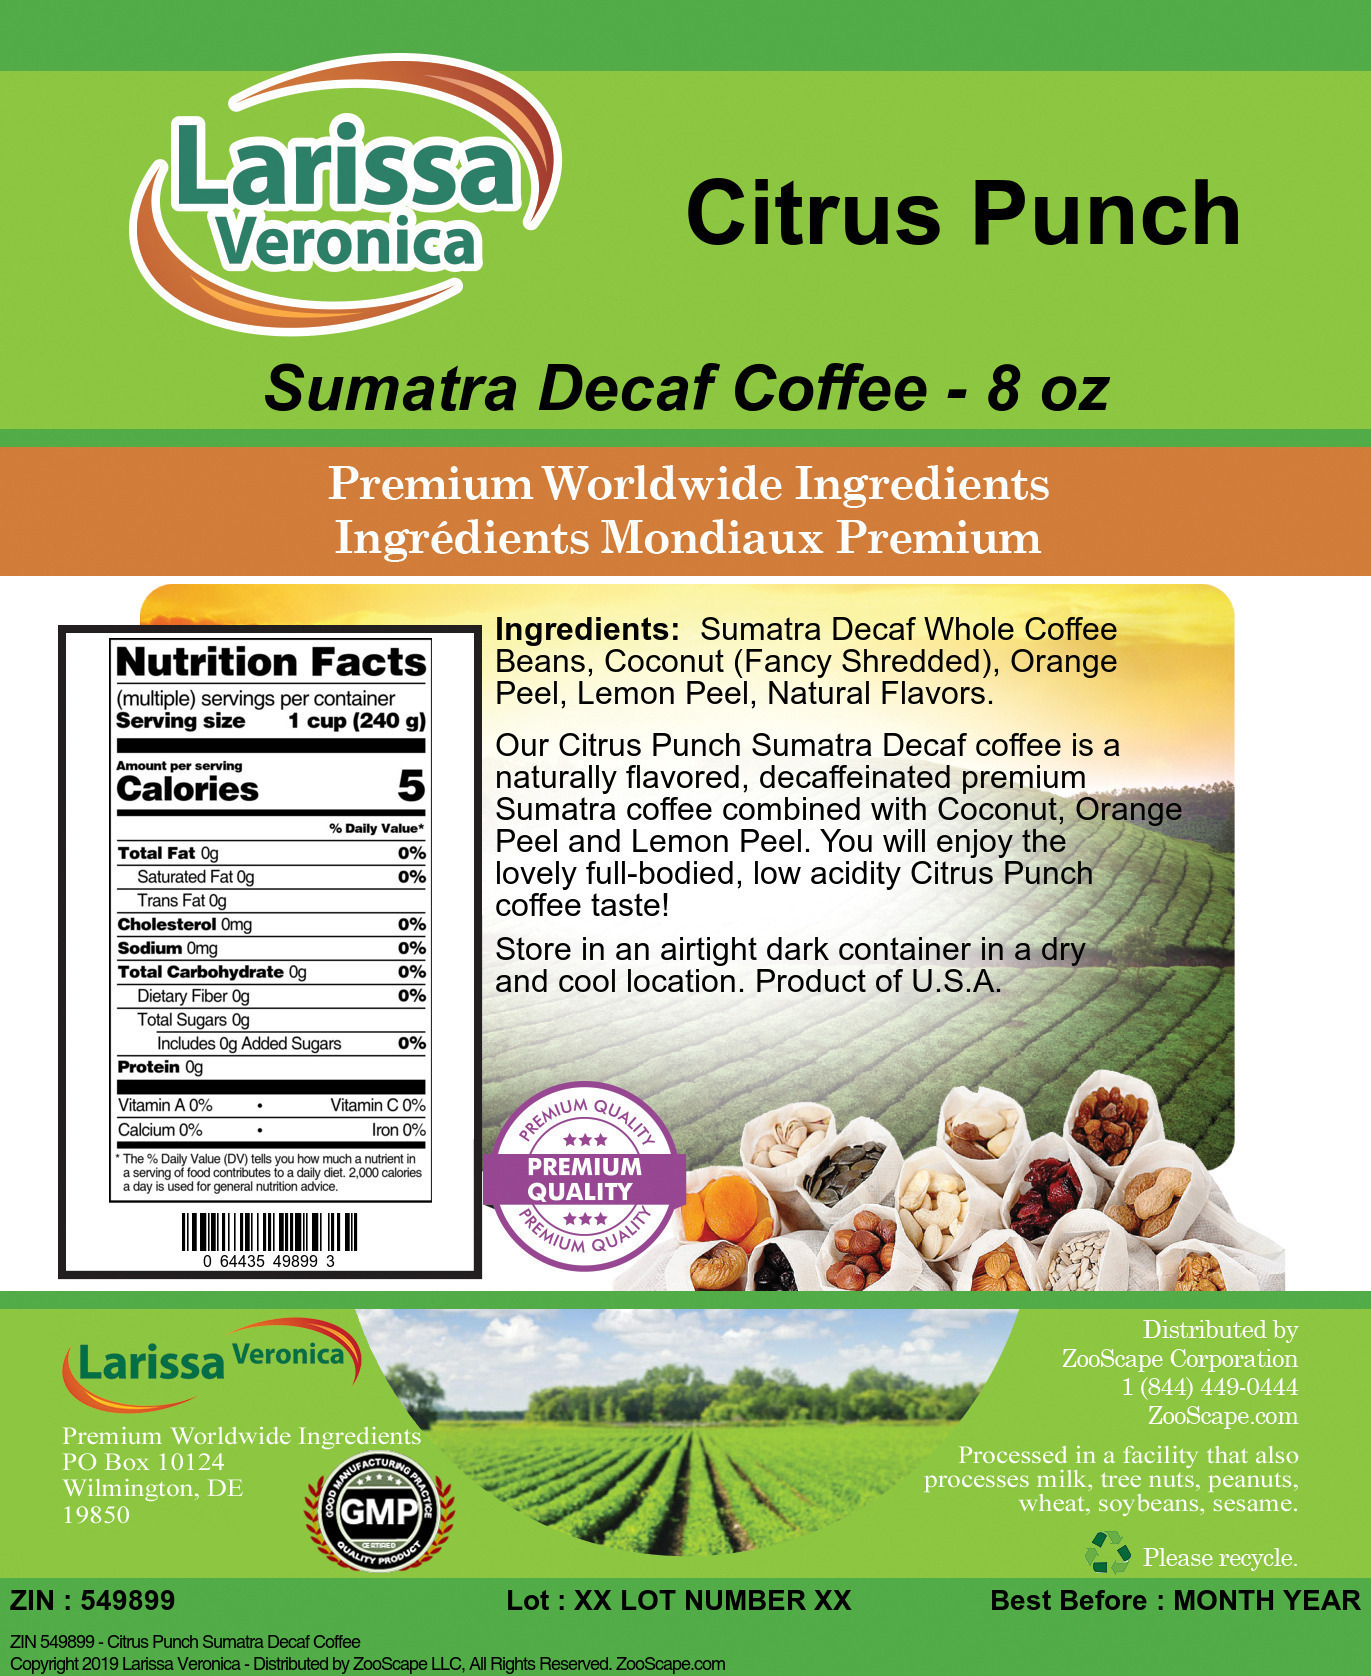 Citrus Punch Sumatra Decaf Coffee - Label